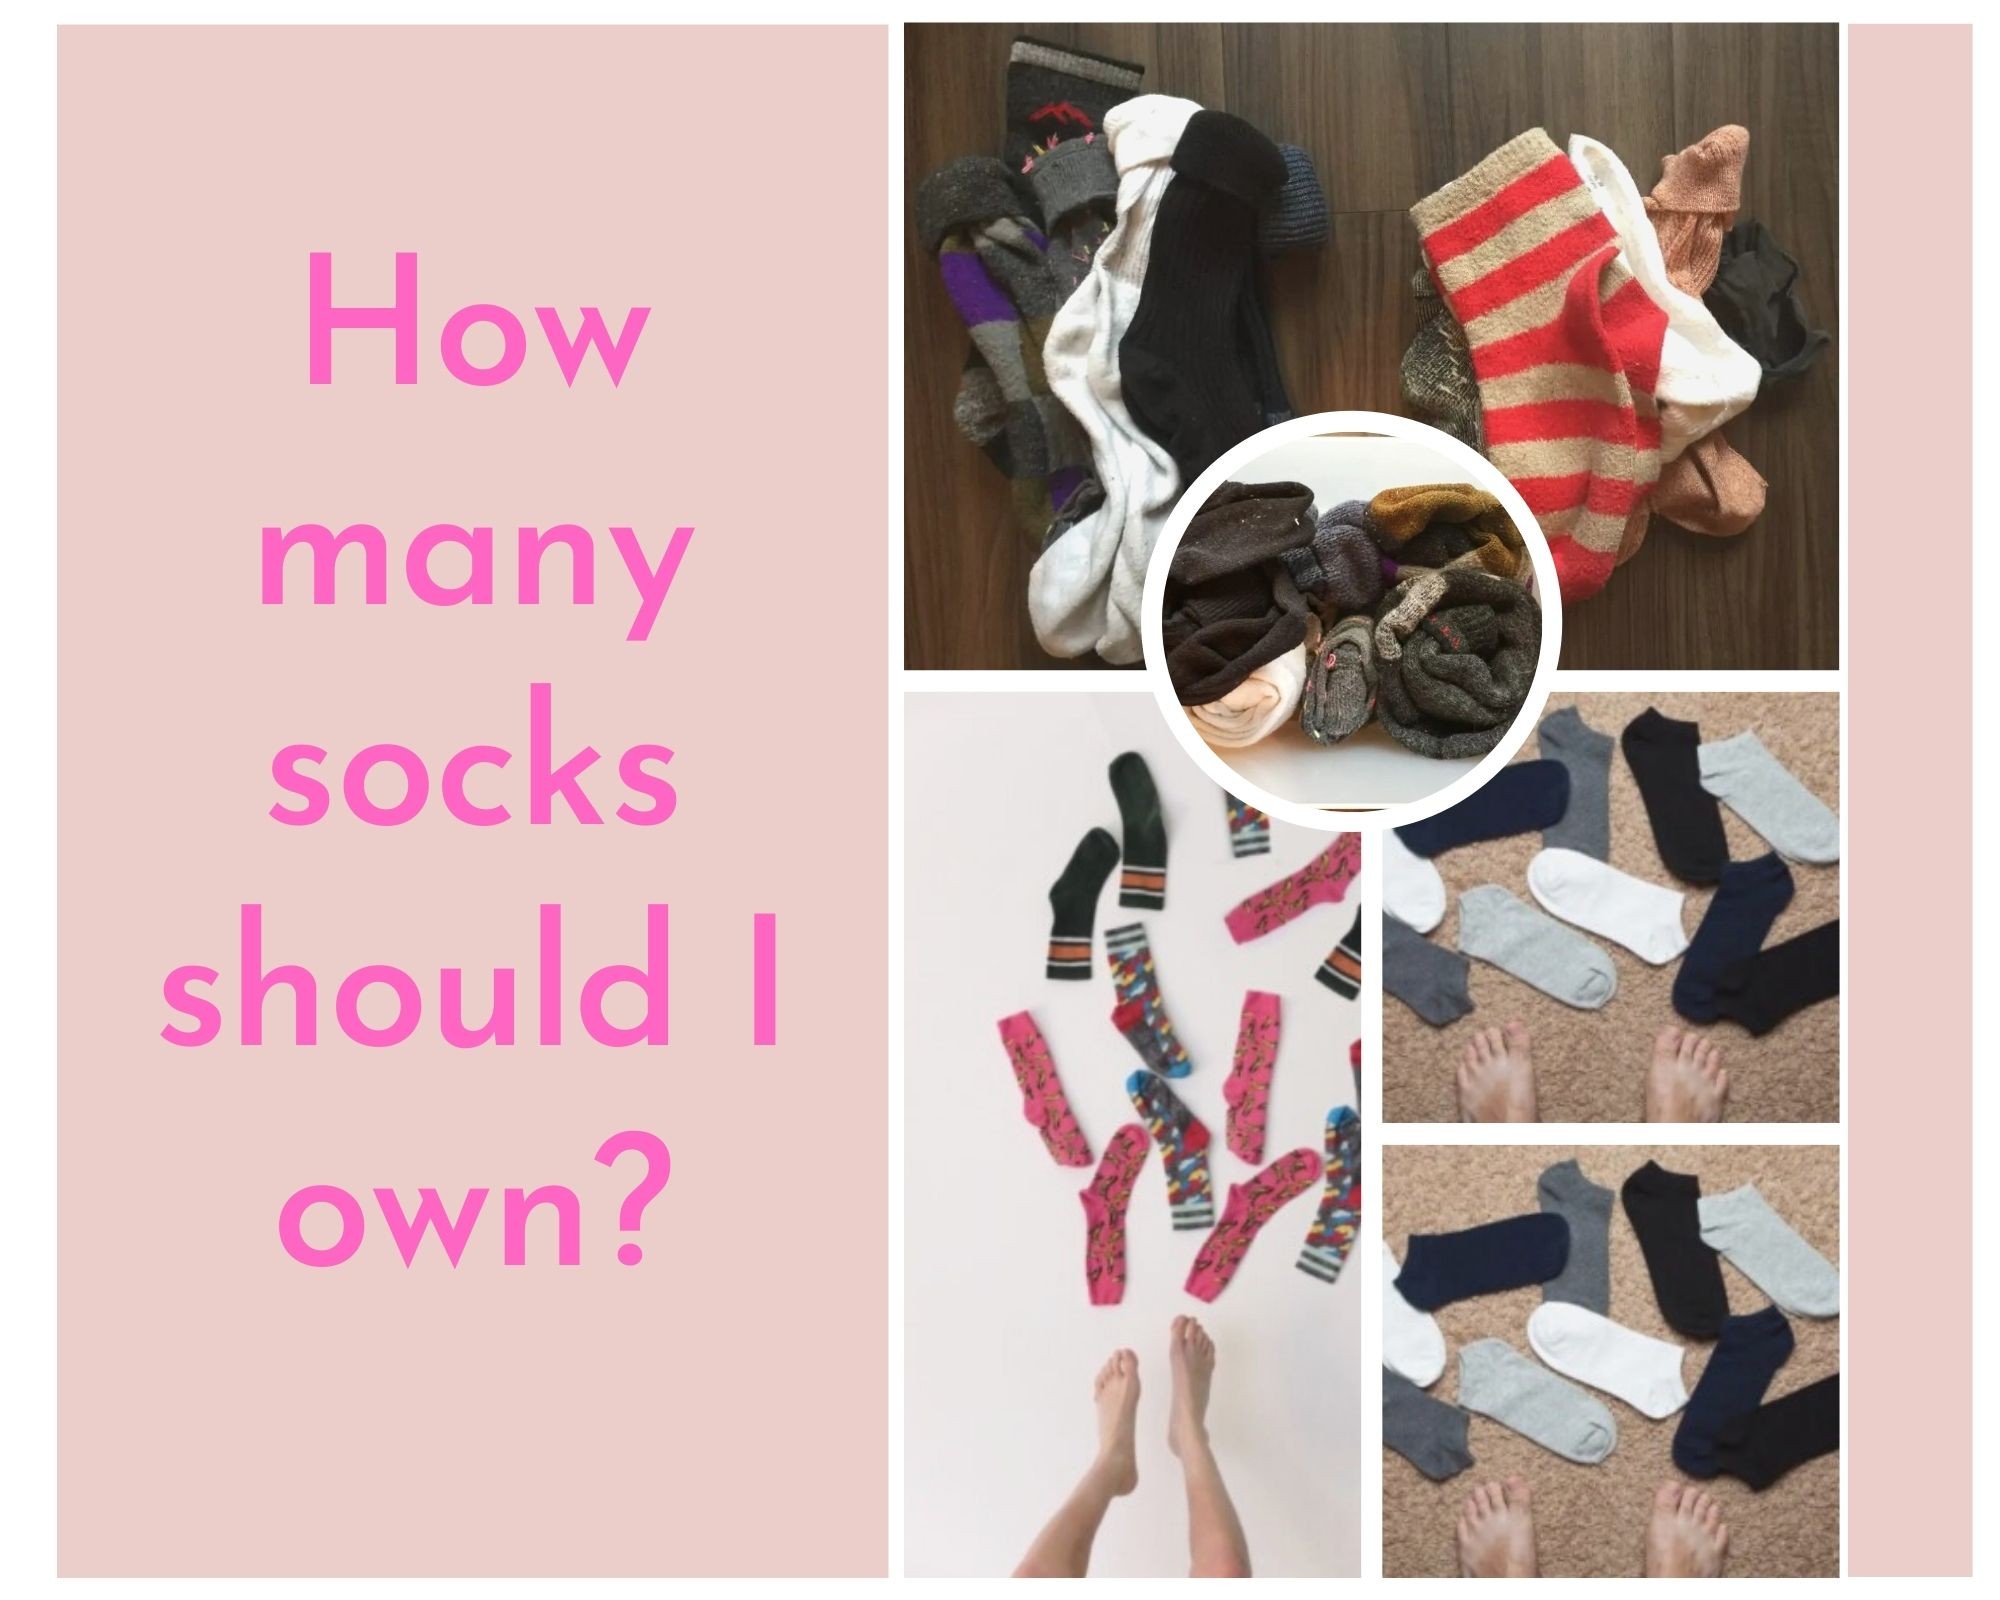 How many socks should I own?